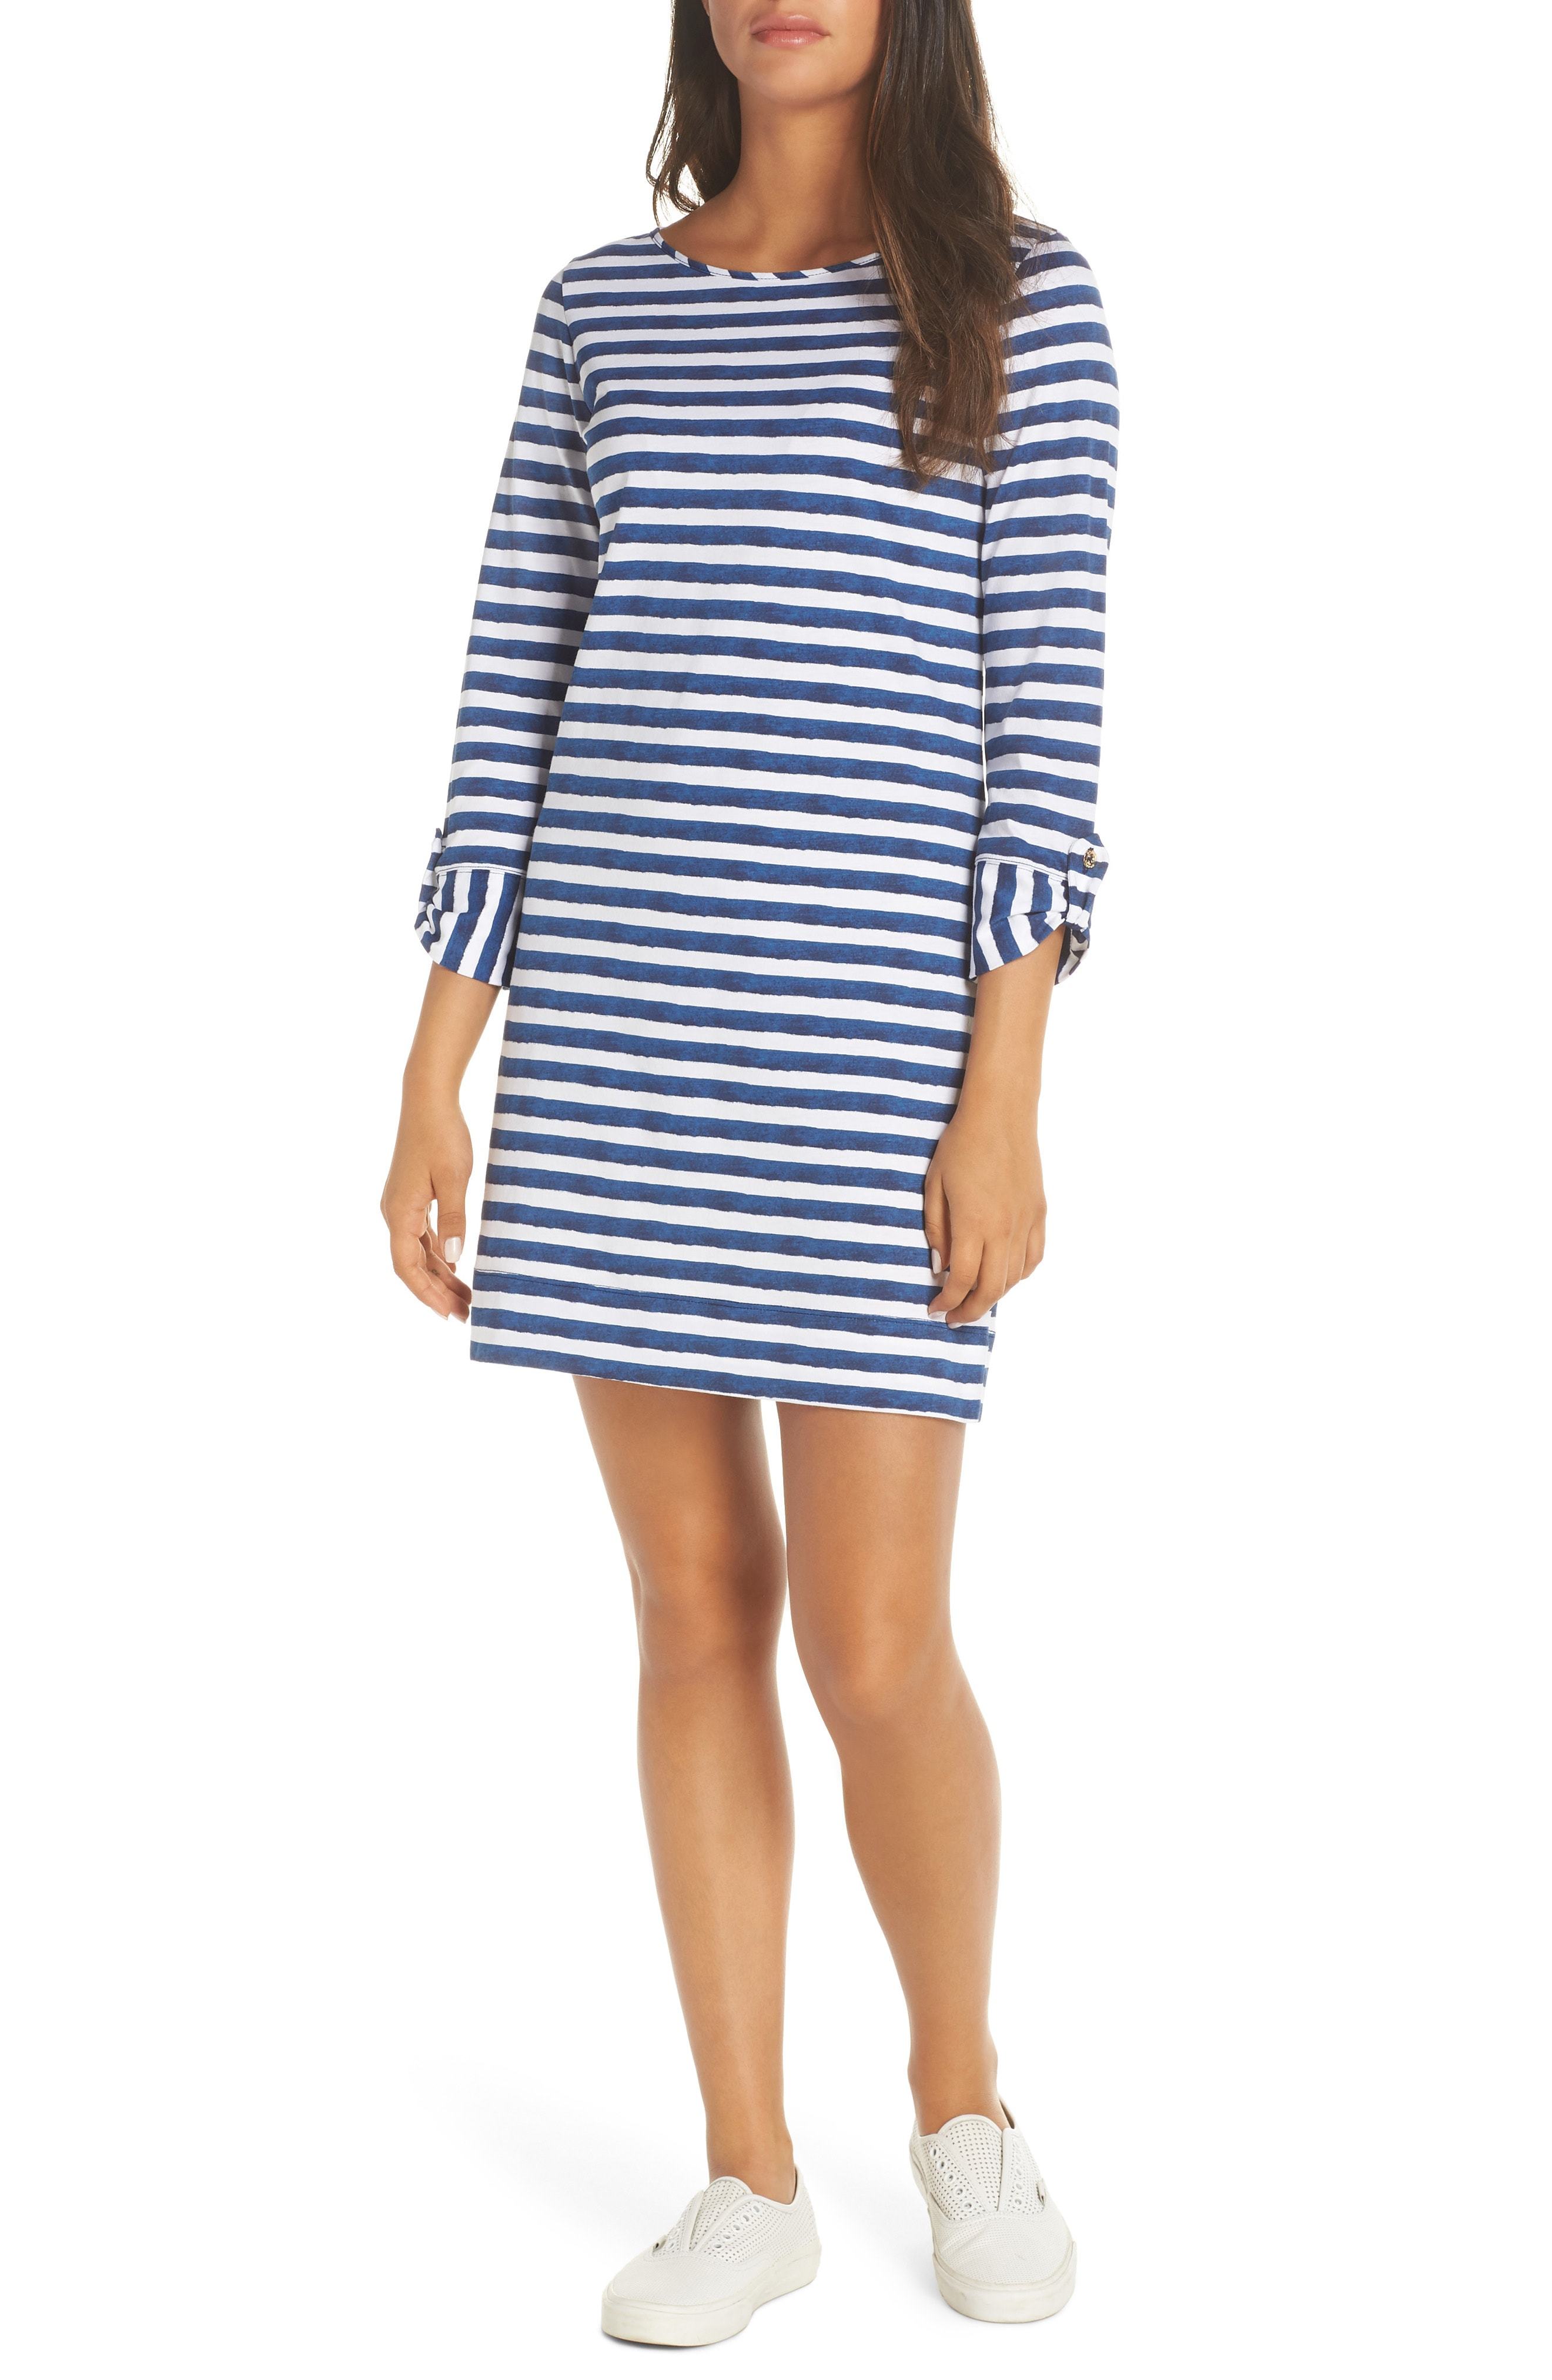 Lilly Pulitzer Marlowe Striped T Shirt Dress, $58 | Nordstrom 